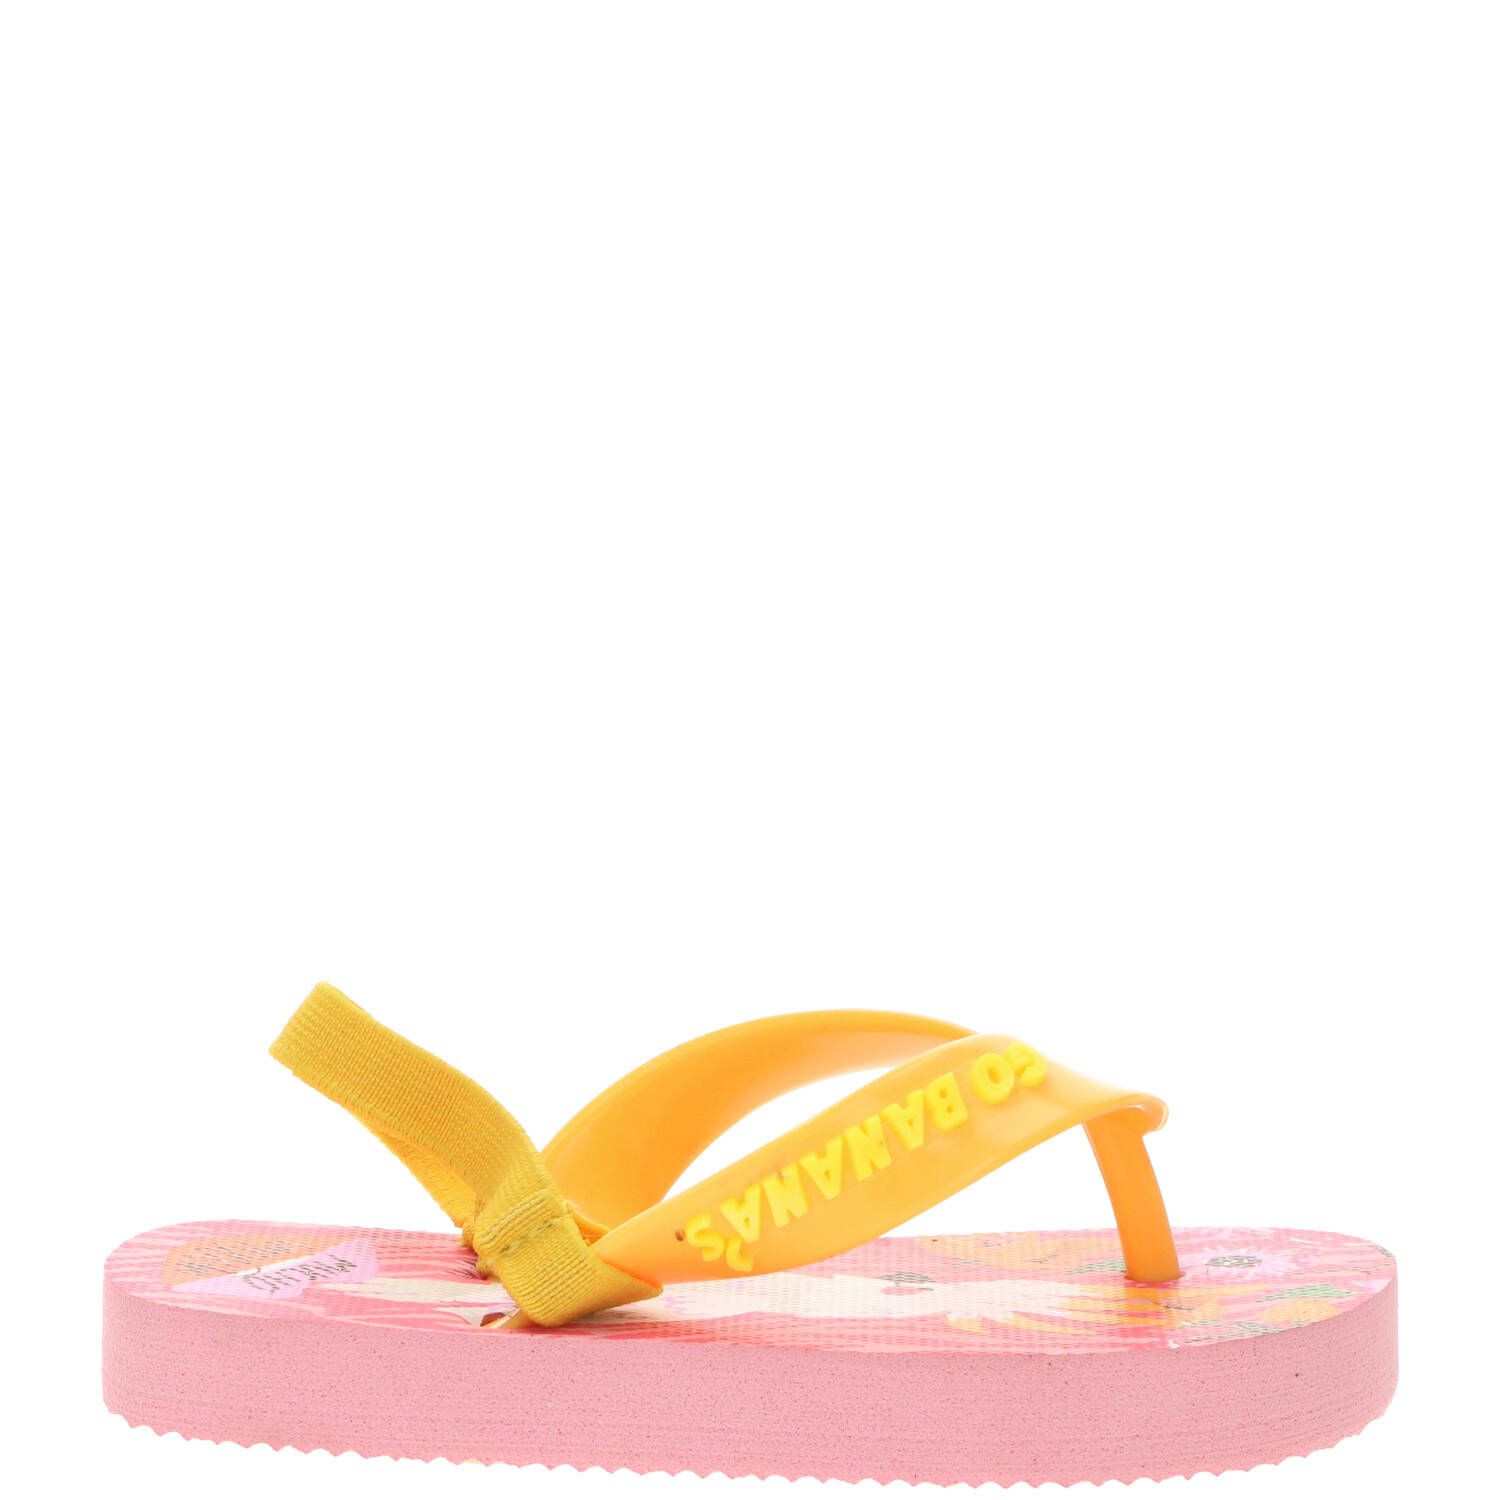 Go Banana's kakatoe slipper, Slippers, Meisje, Maat 28, roze/multi